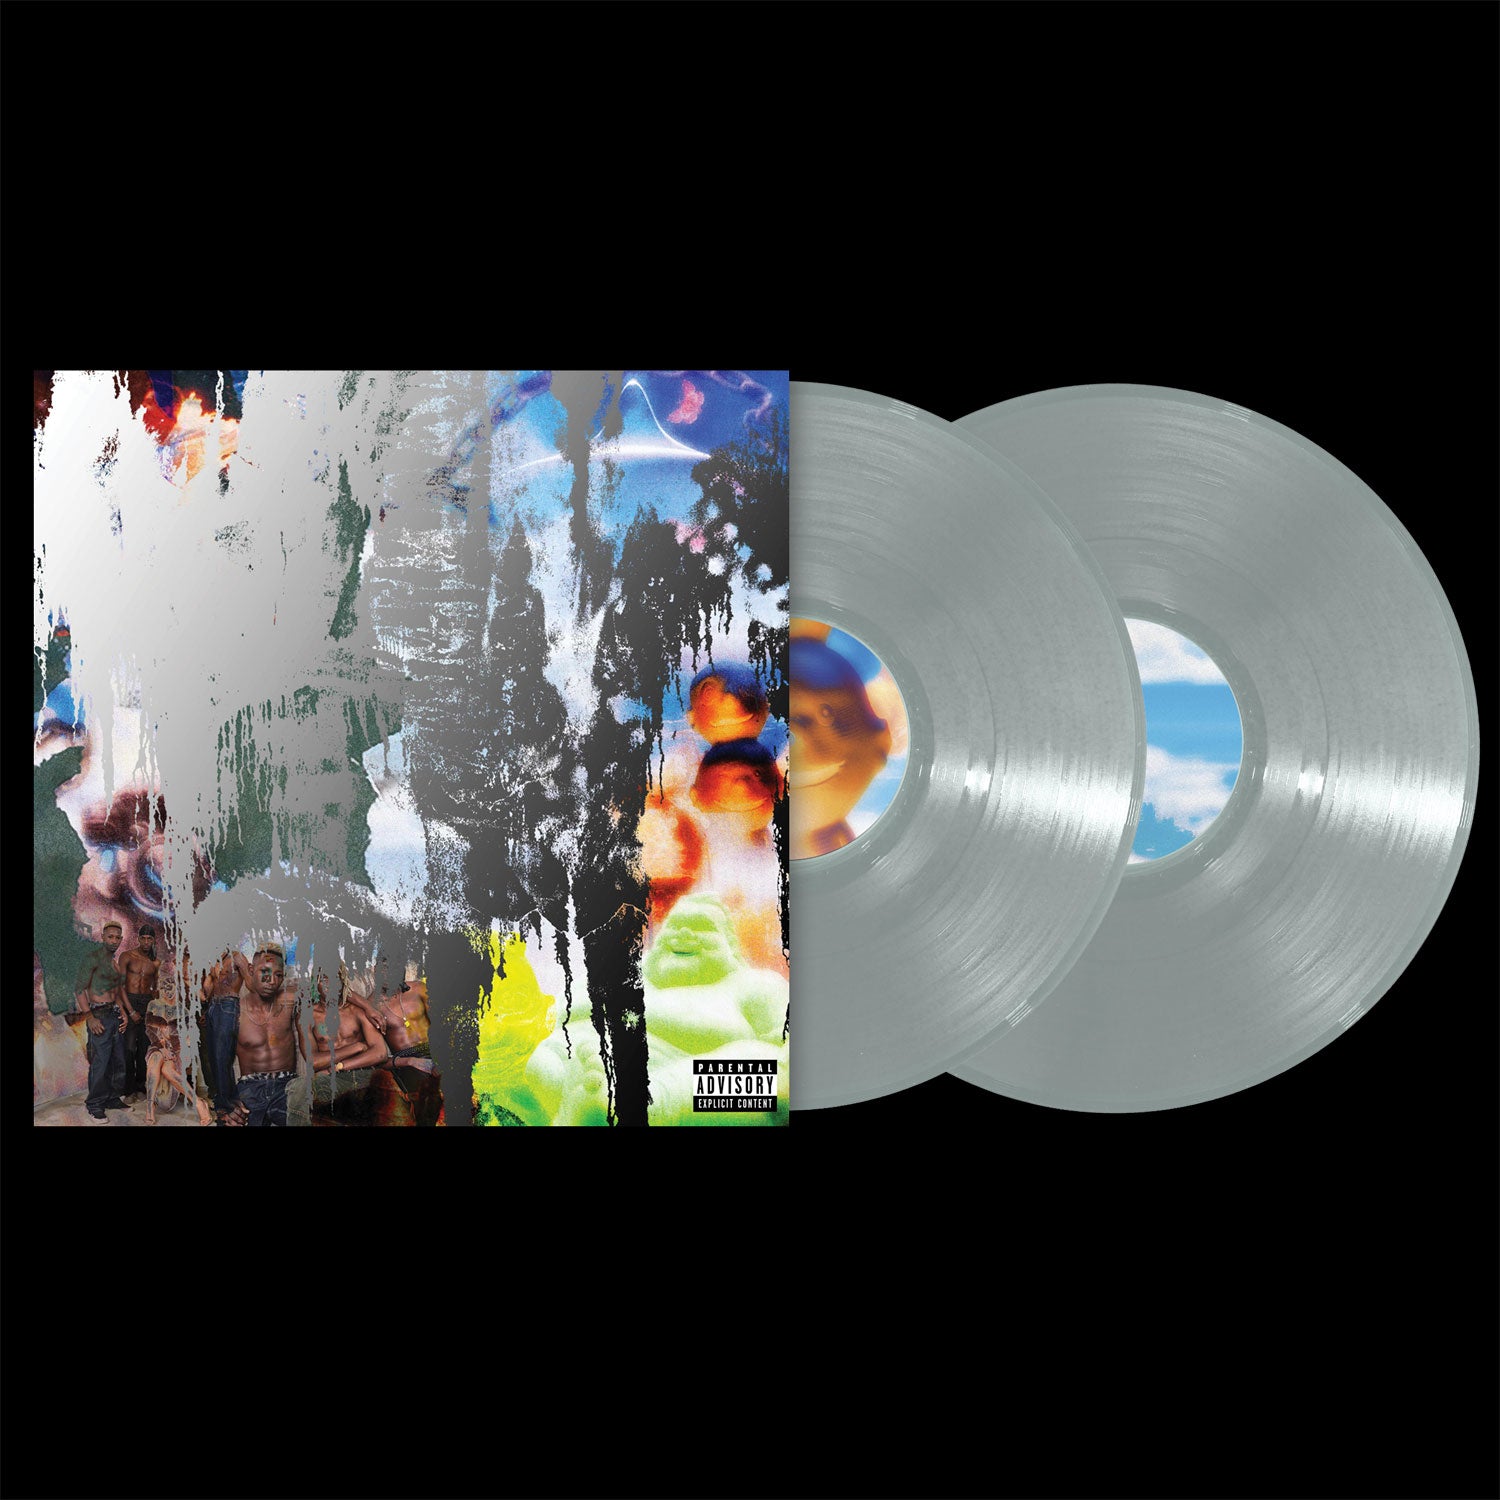 Travis Scott – Carved Vinyl Record Art Decor – Astro Vinyl Art